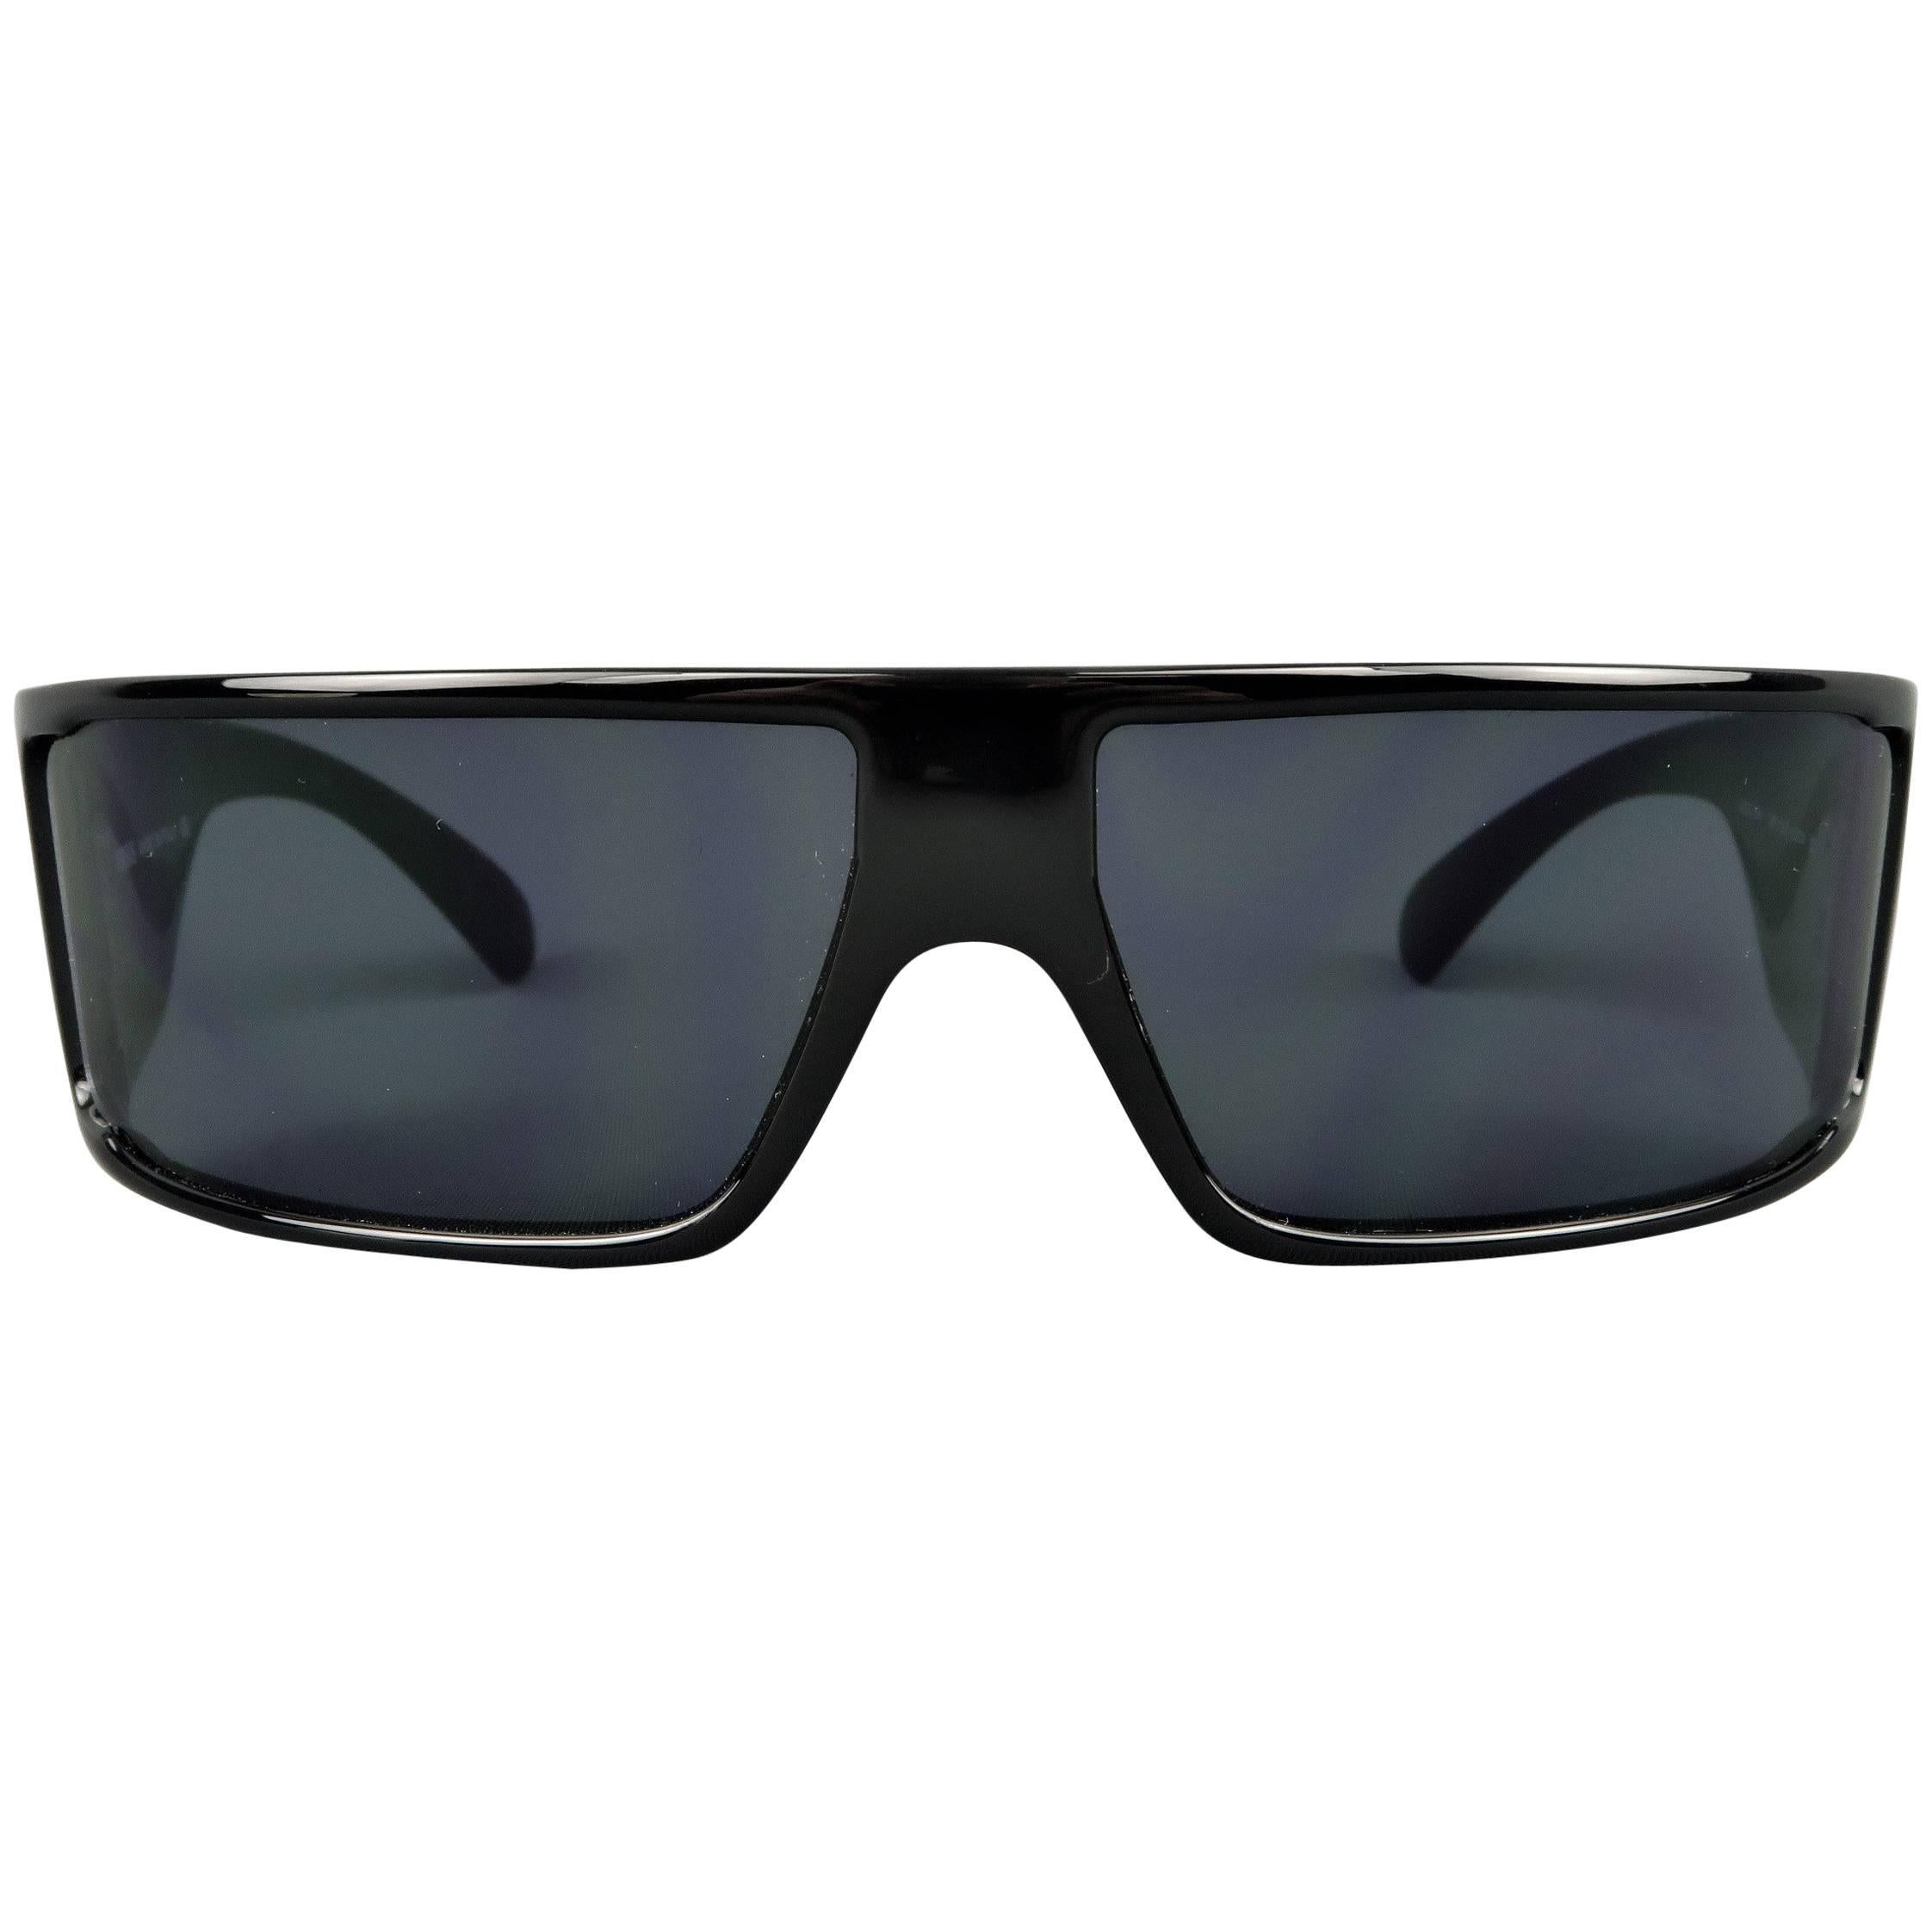 VERSUS by GIANNI VERSACE Black Acetate Mod. EW1 Sunglasses